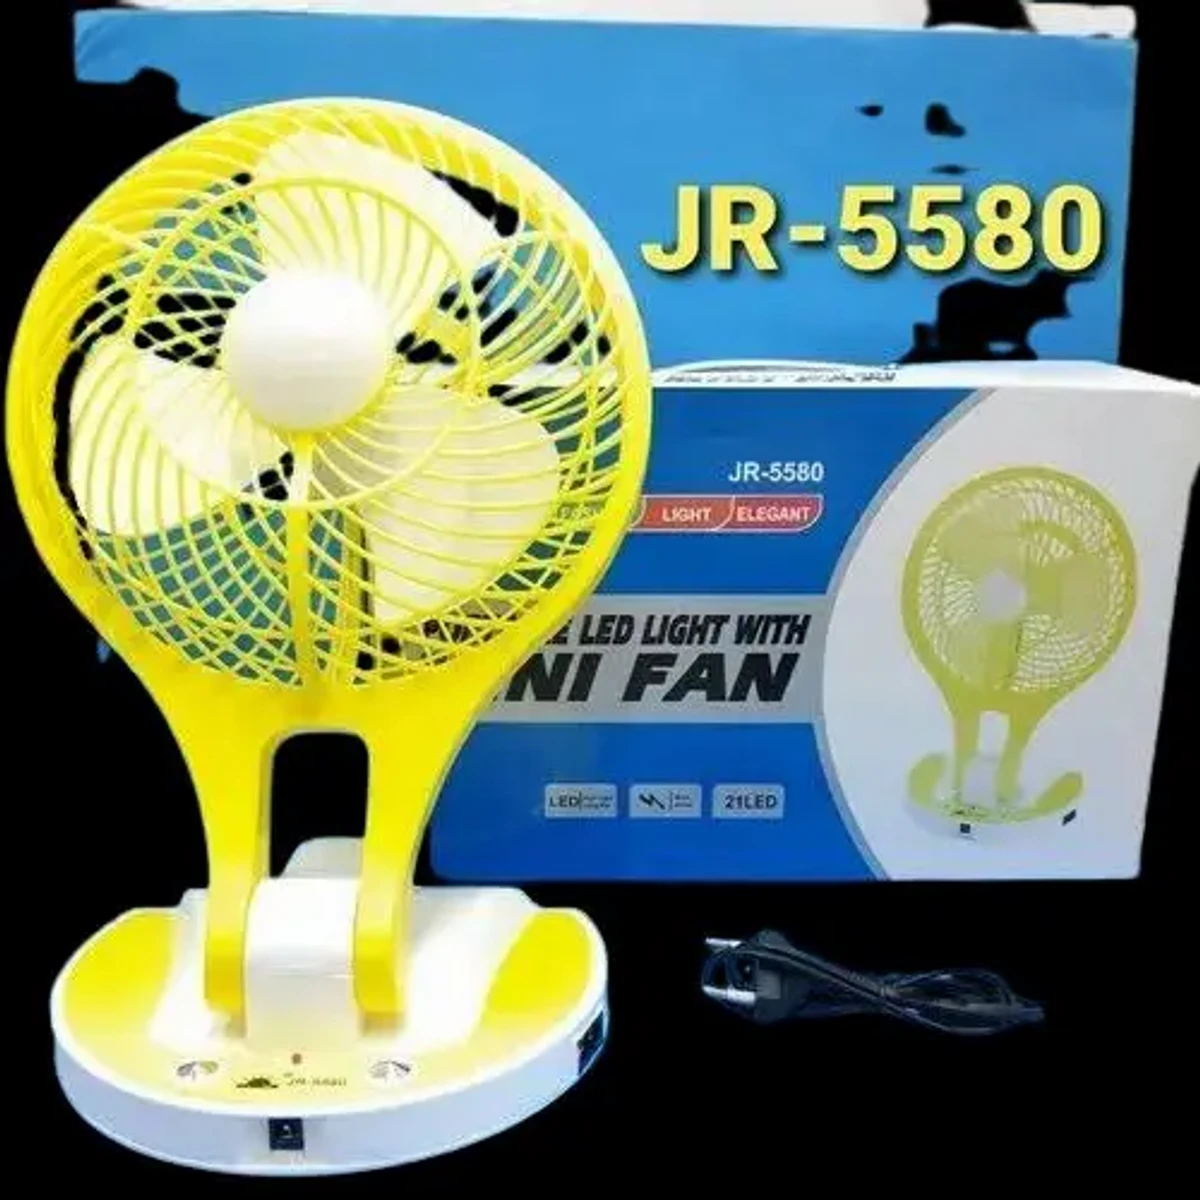 JR-5580 Portable LED Light with Mini Fan (স্টকে যে কালার থাকবে ওই কালার পাঠানো হবে)